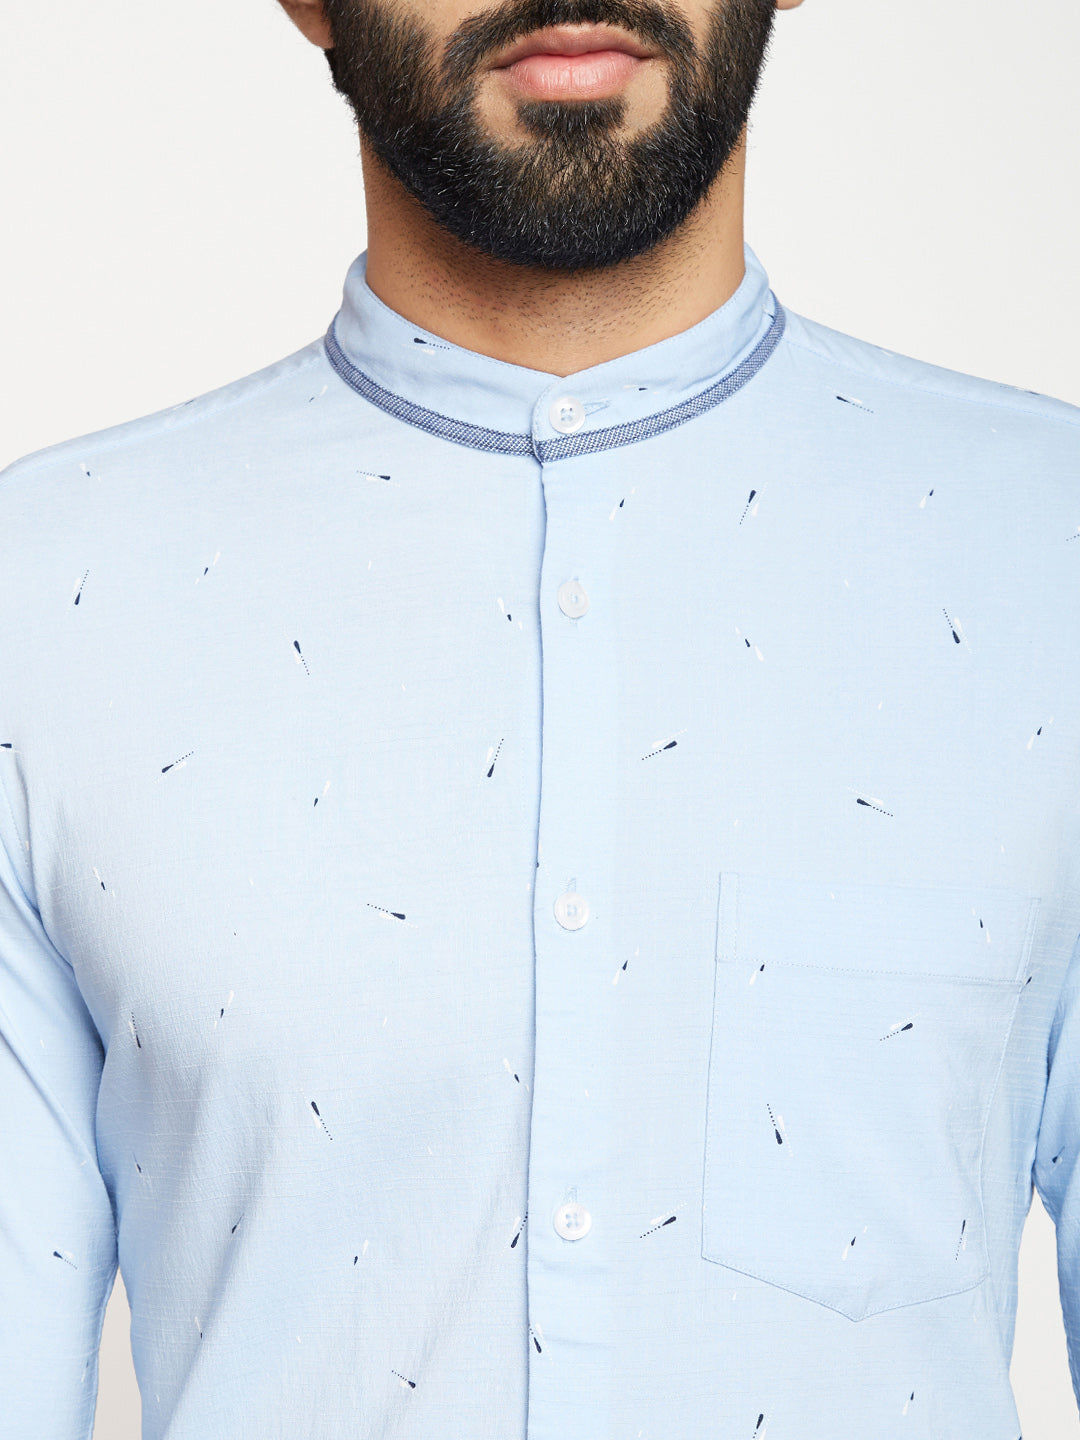 Blue Printed SilmFit shirt - Men Shirts